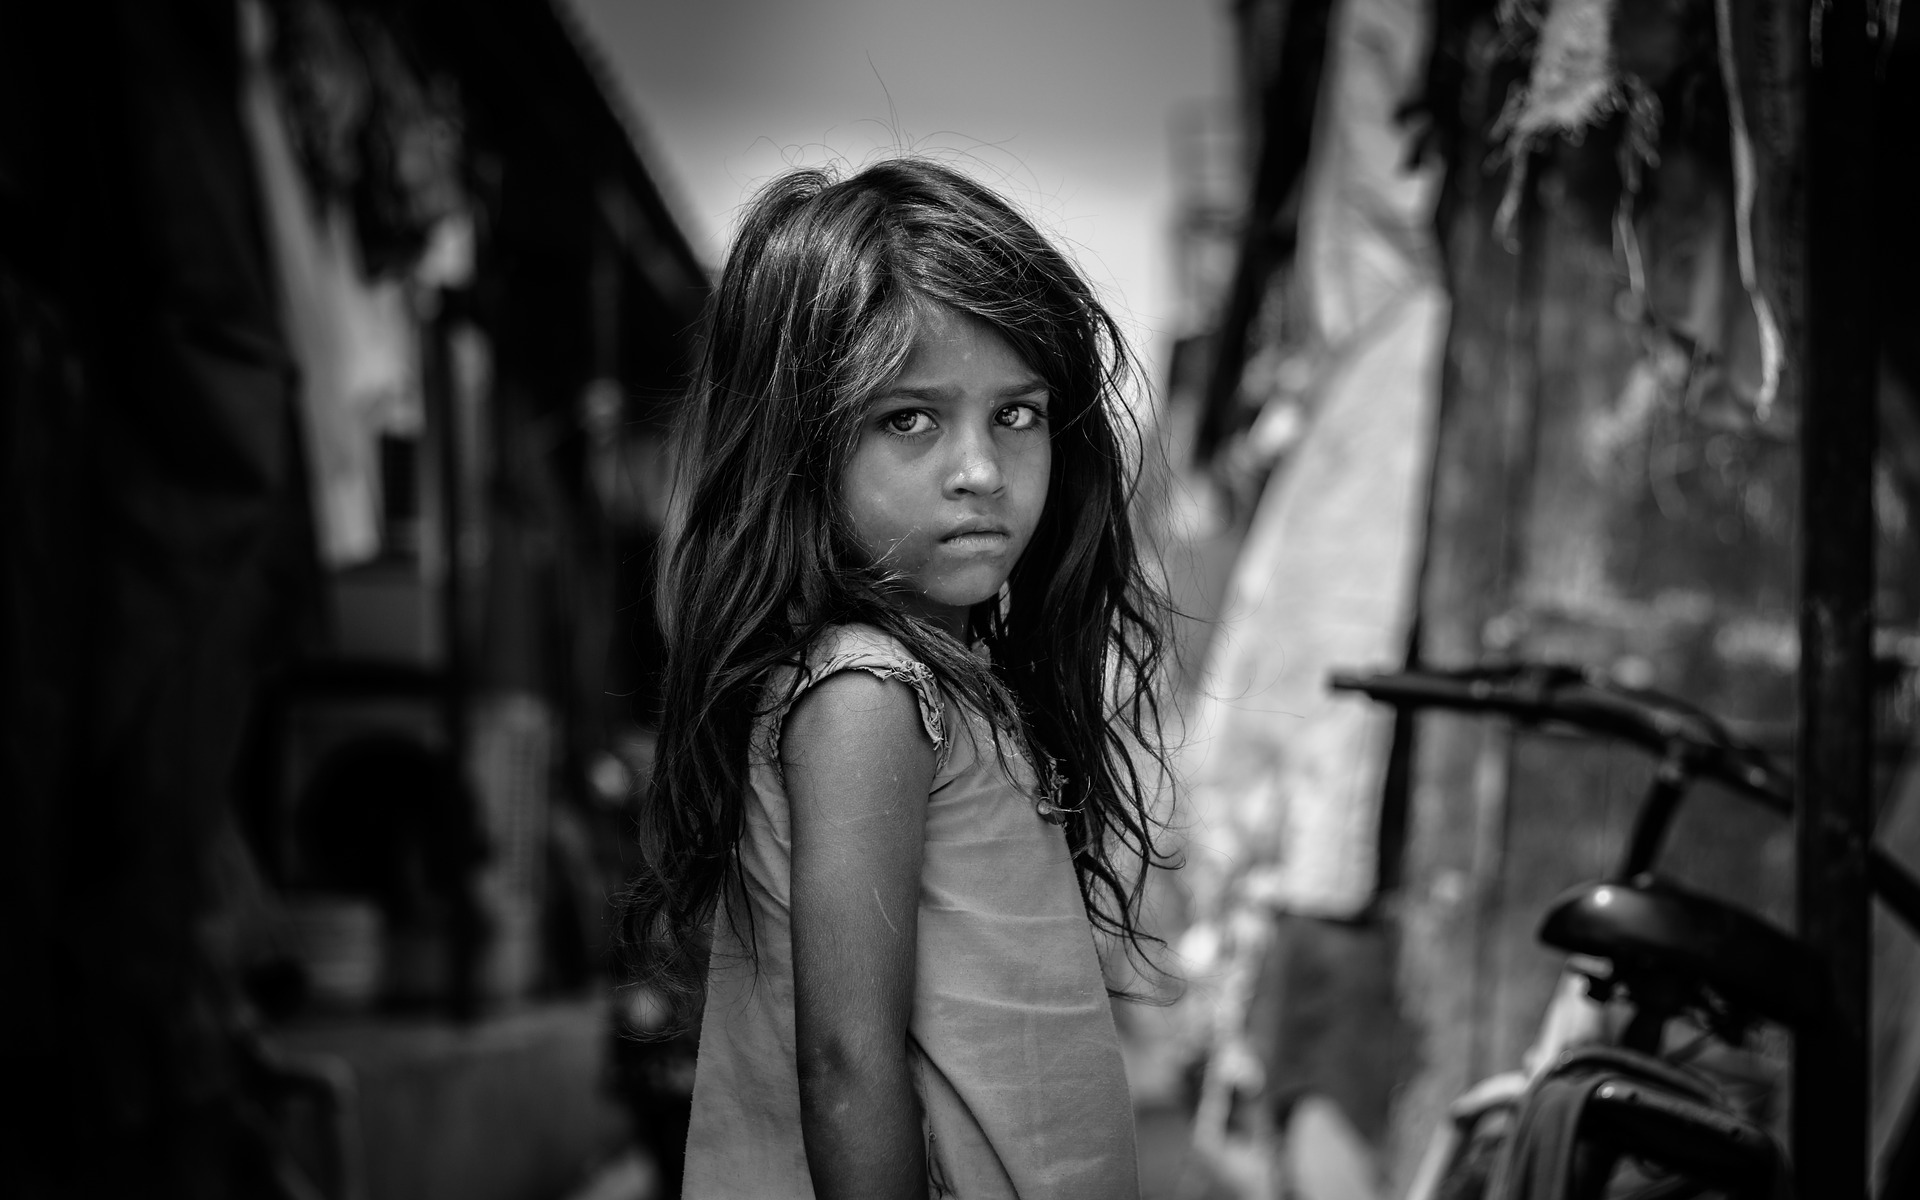 Girl kid child portrait sad poor